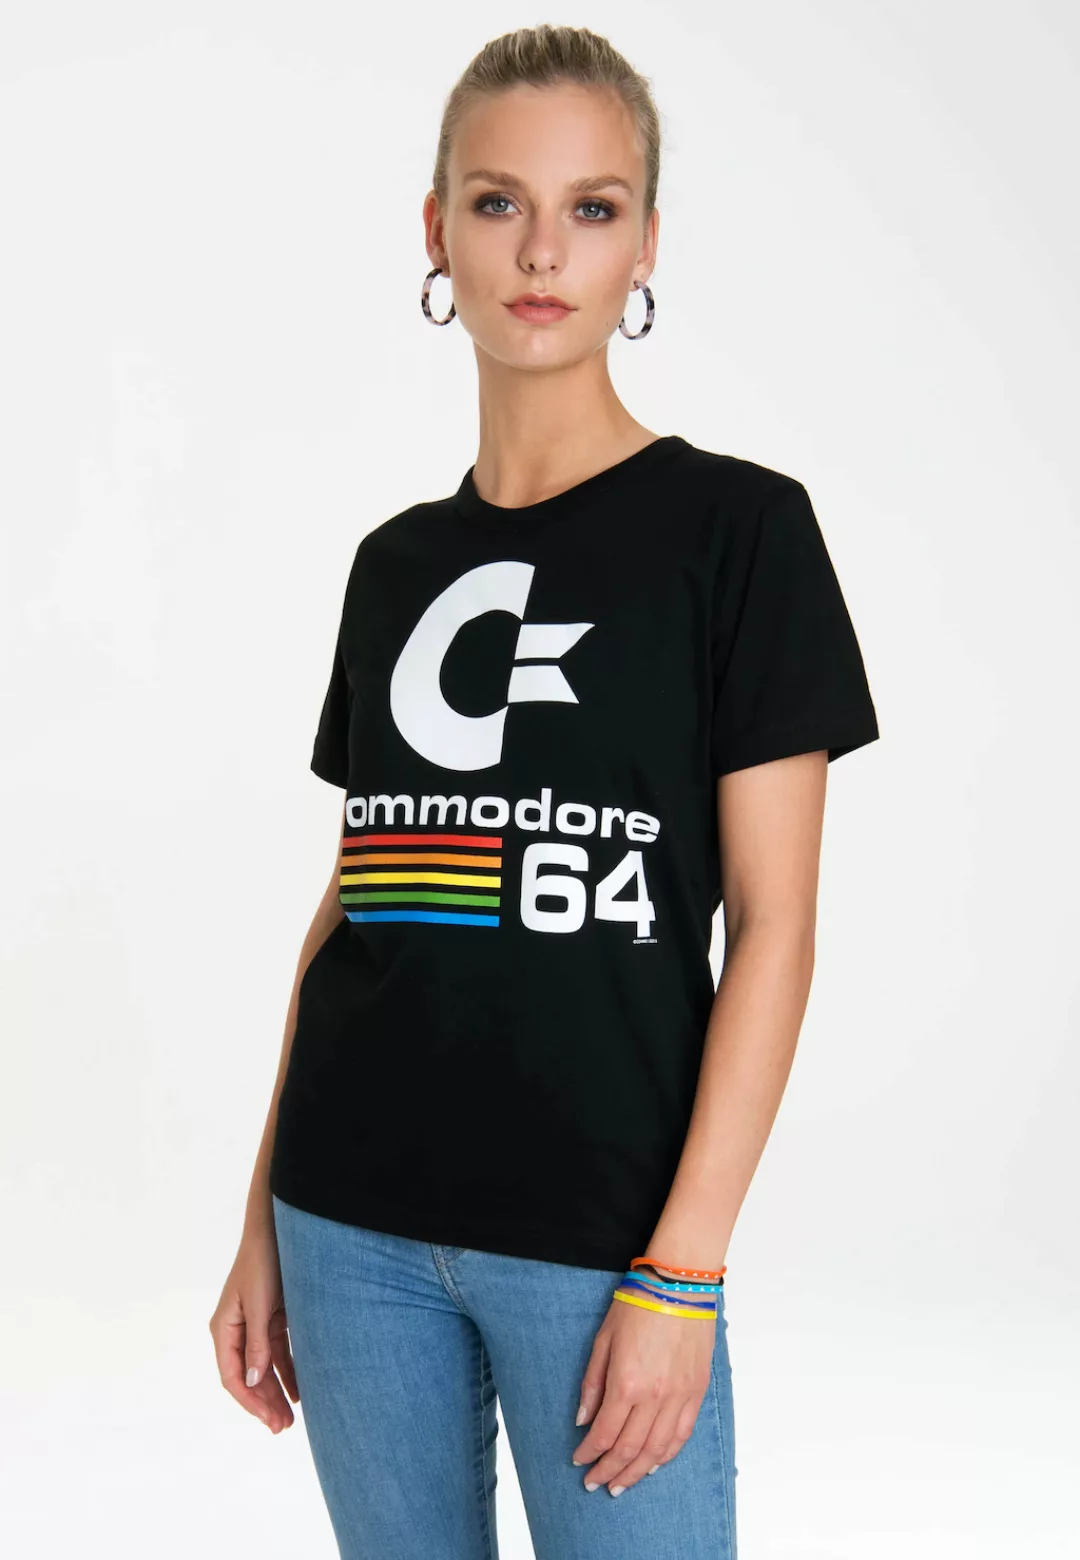 LOGOSHIRT T-Shirt "Commodore C64" günstig online kaufen